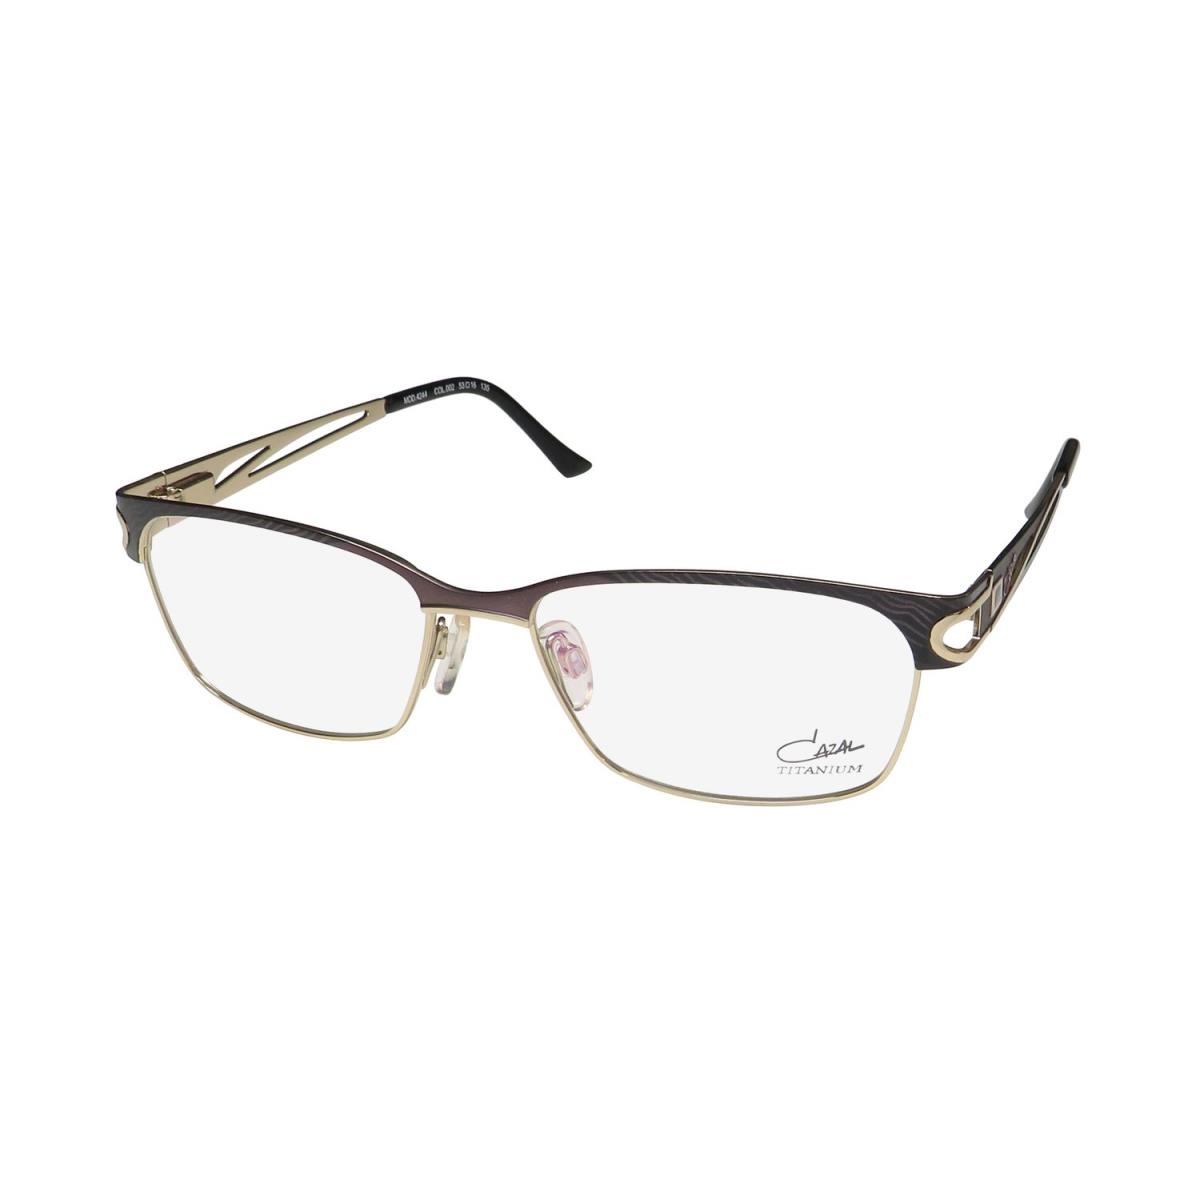 Cazal 4244 Titanium Made IN Germany Full-rim Eyeglass Frame/eyewear Anthracite / Black / Gold